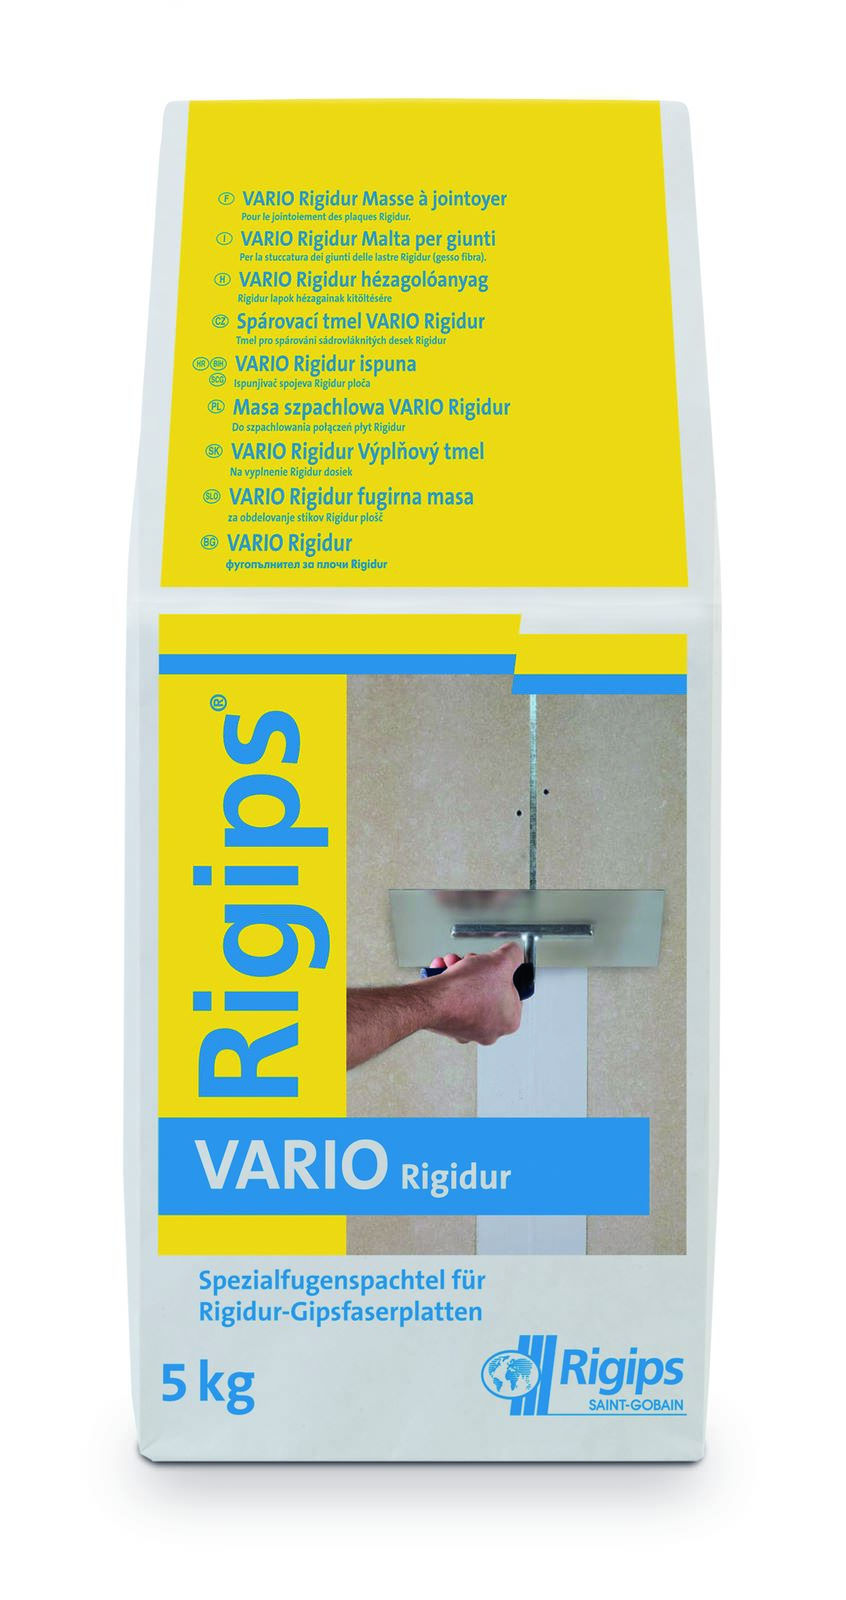 Rigips Vario Rigidur Fugenspachtel, 5 kg